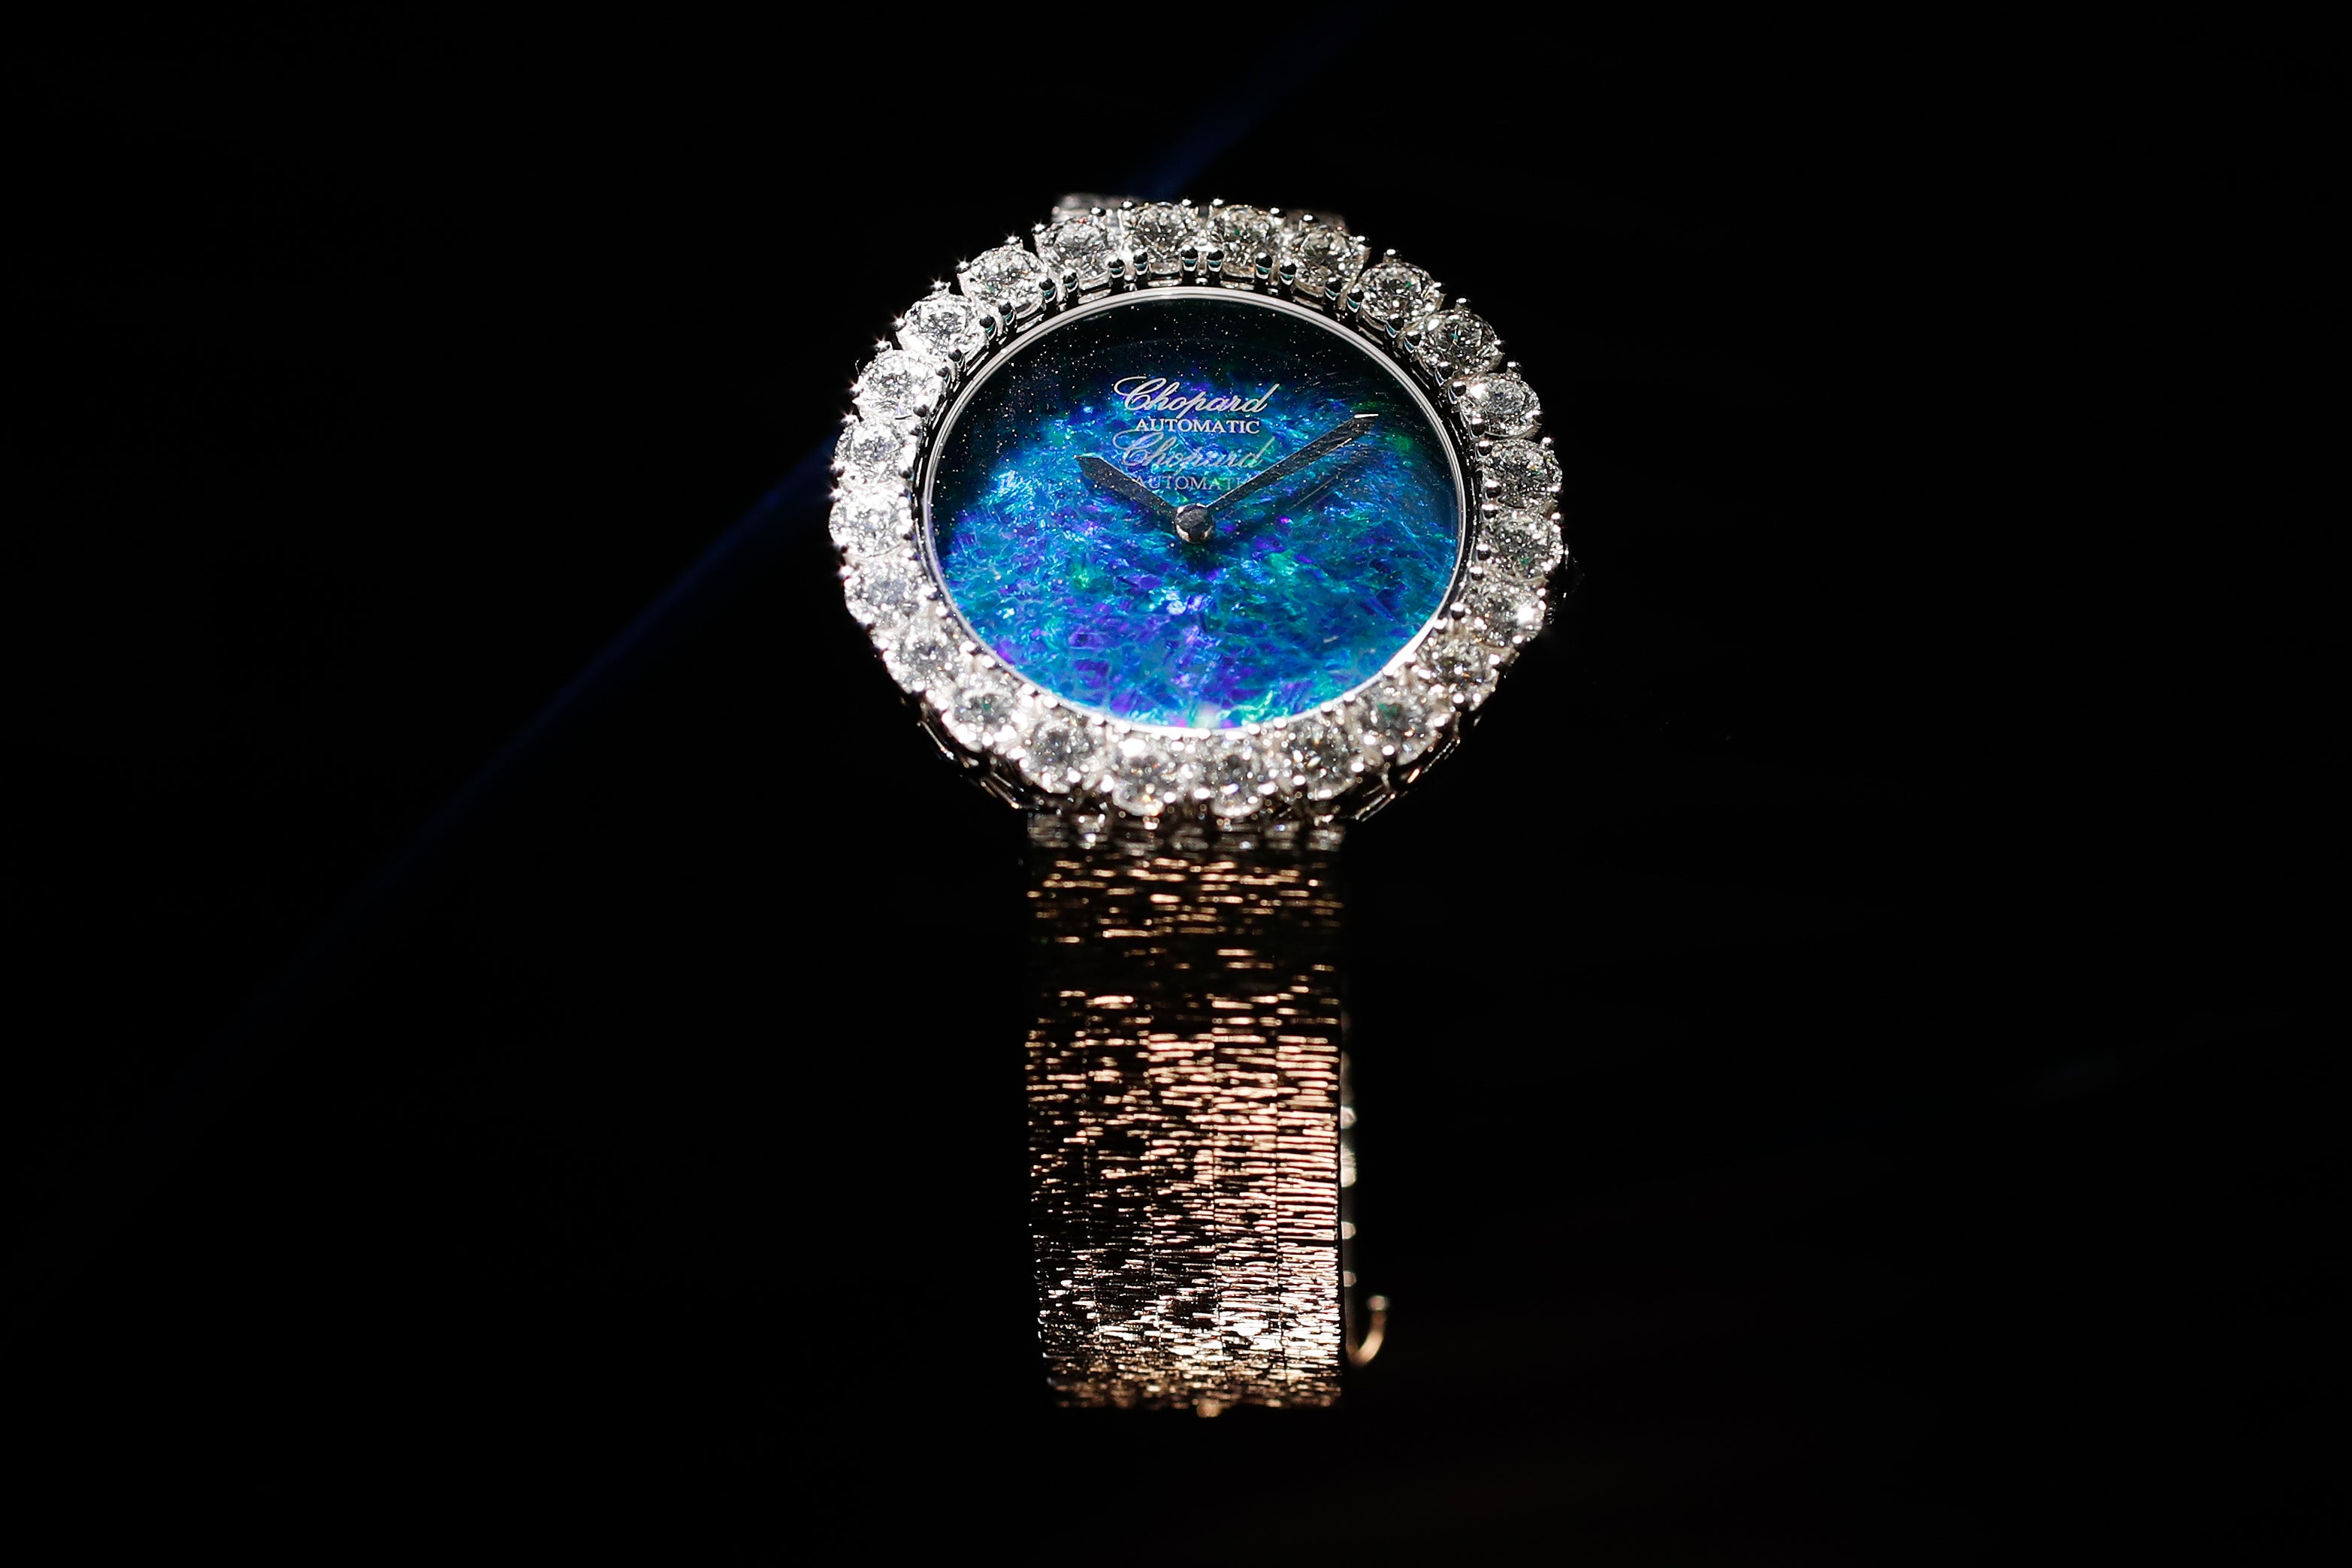 A L’Heure de Diamant smartwatch on display in Basel, Switzerland